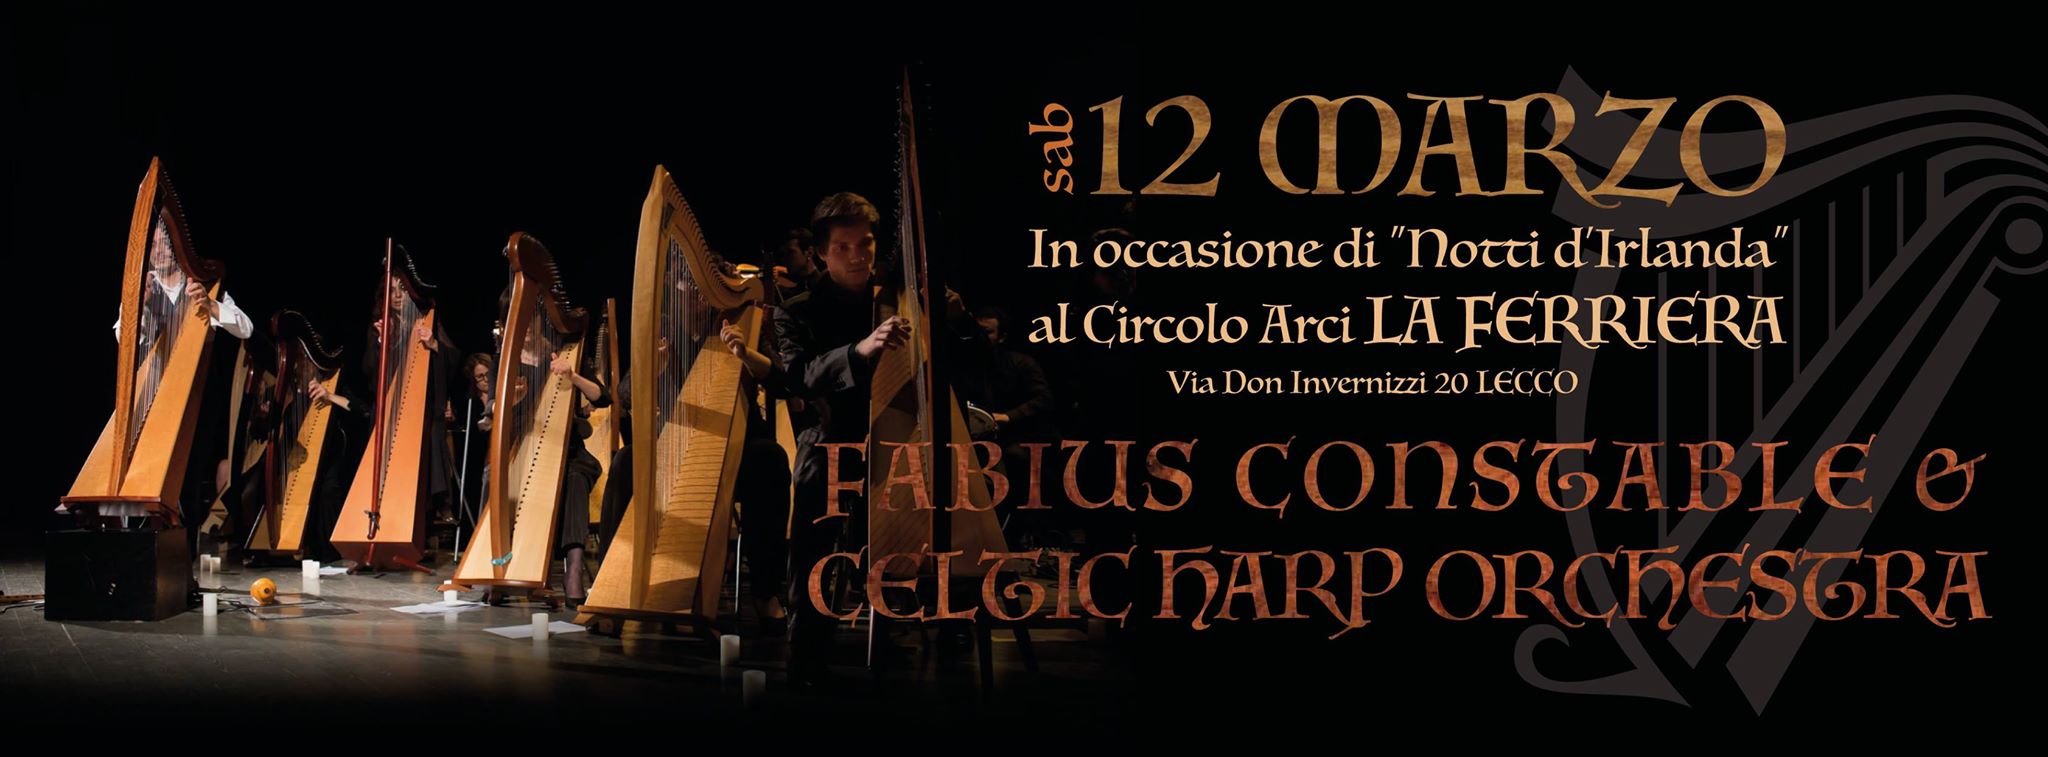 Fabius Constable & Celtic Harp Orchestra